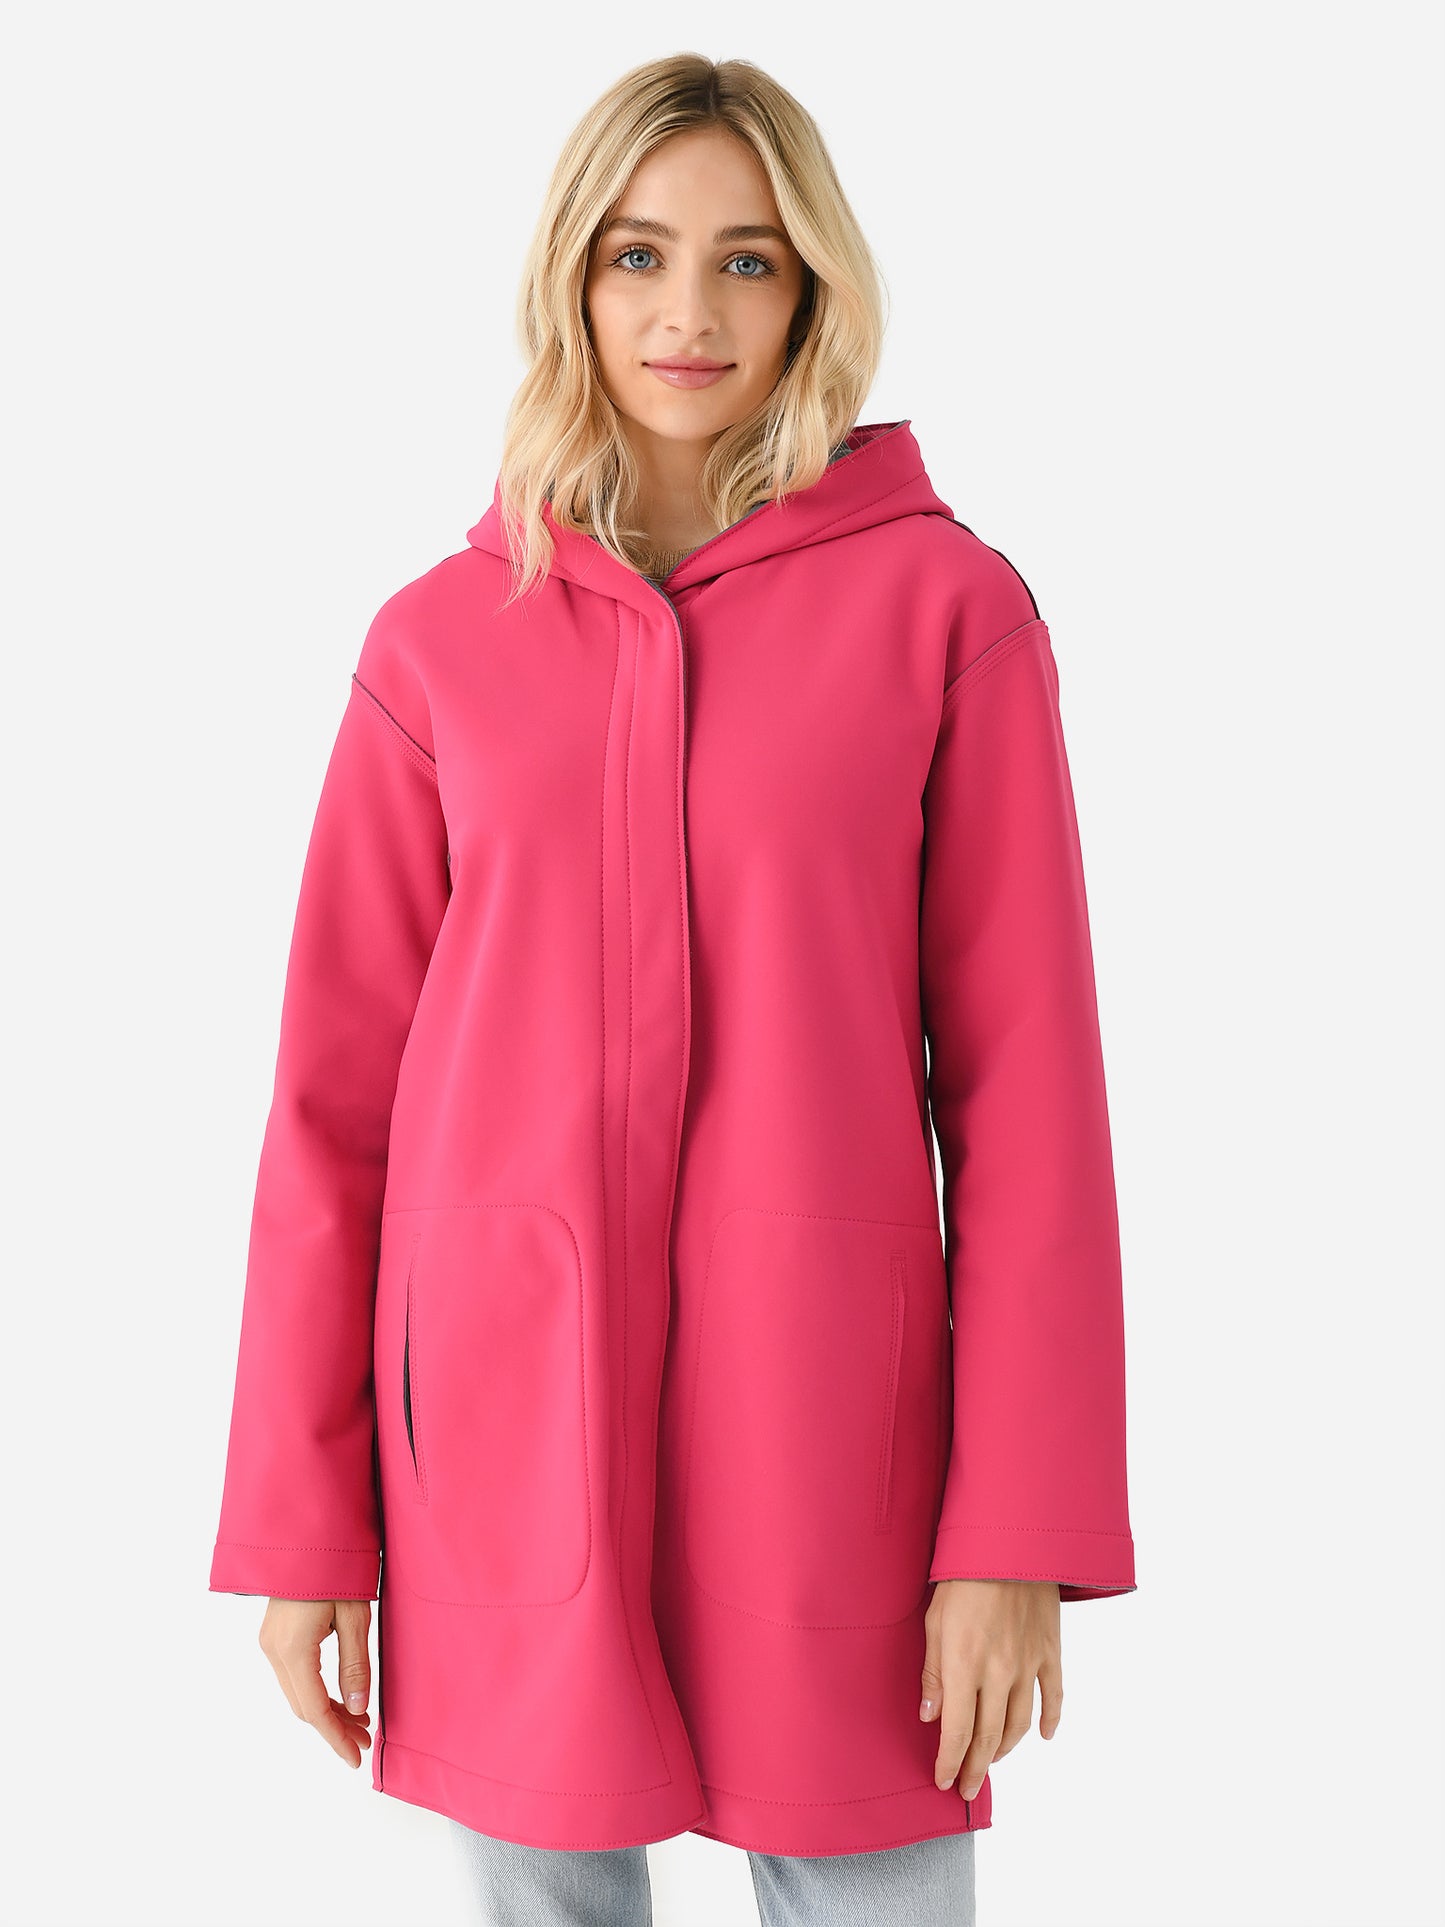 Frauenschuh Women's Olivia Soft Shell Rain Jacket